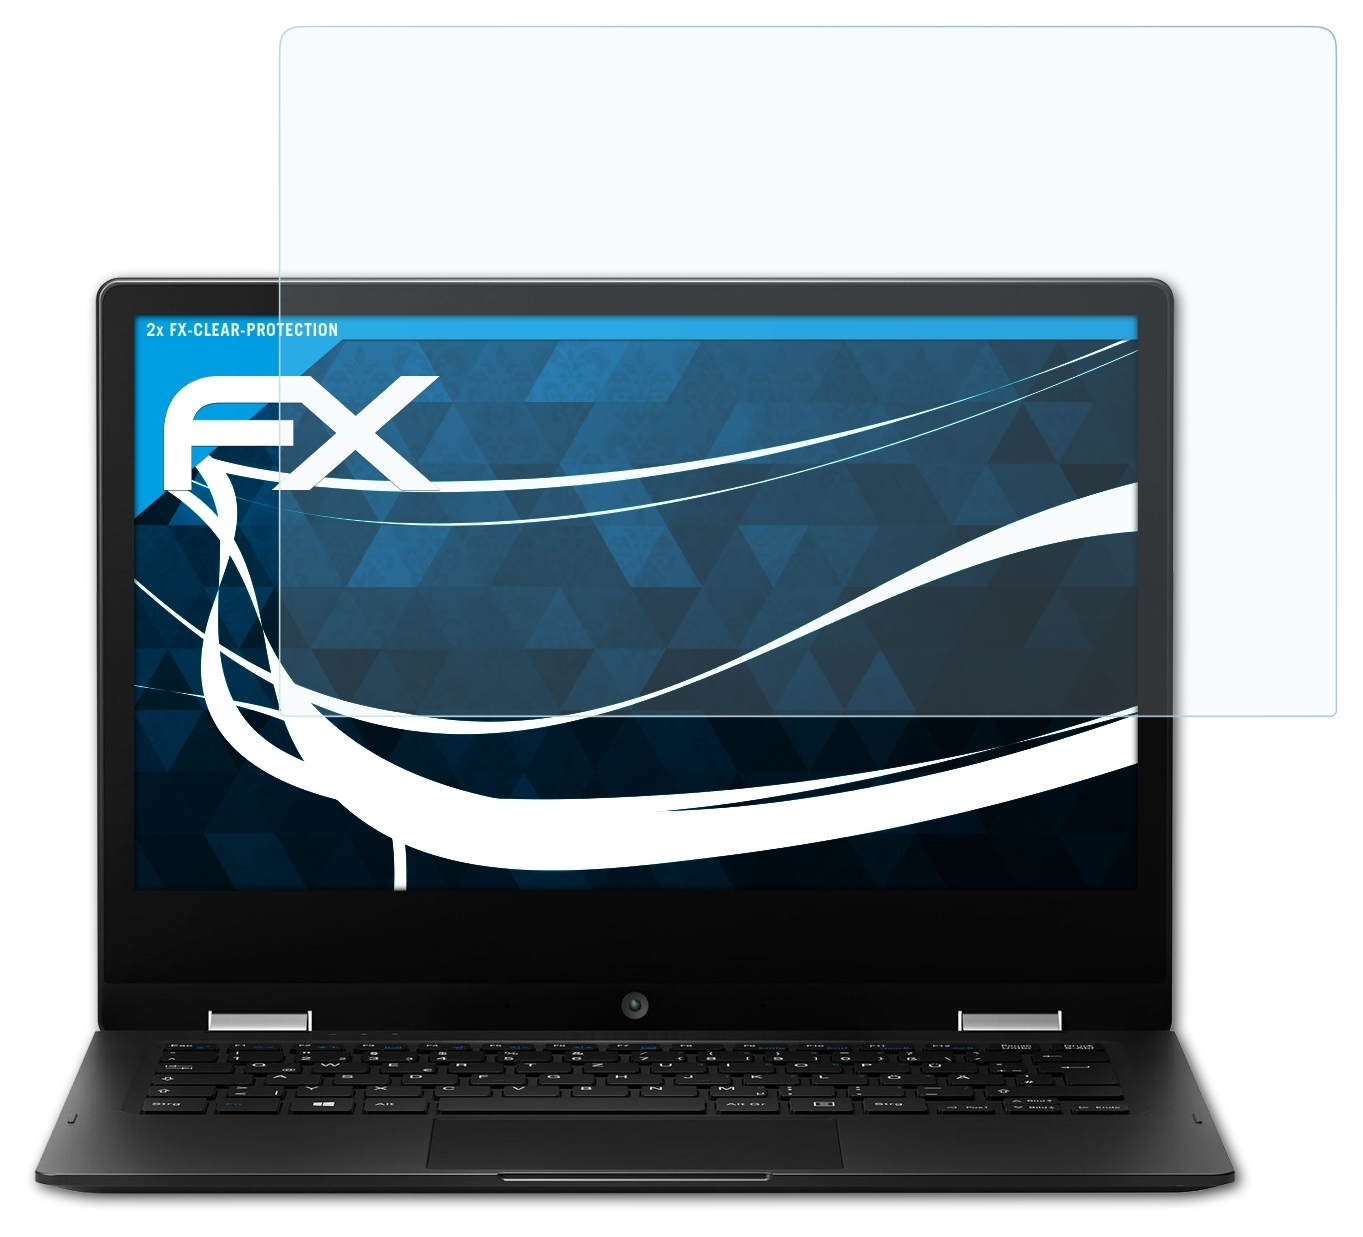 ATFOLIX 2x FX-Clear (MD61093)) AKOYA Medion Displayschutz(für E2291